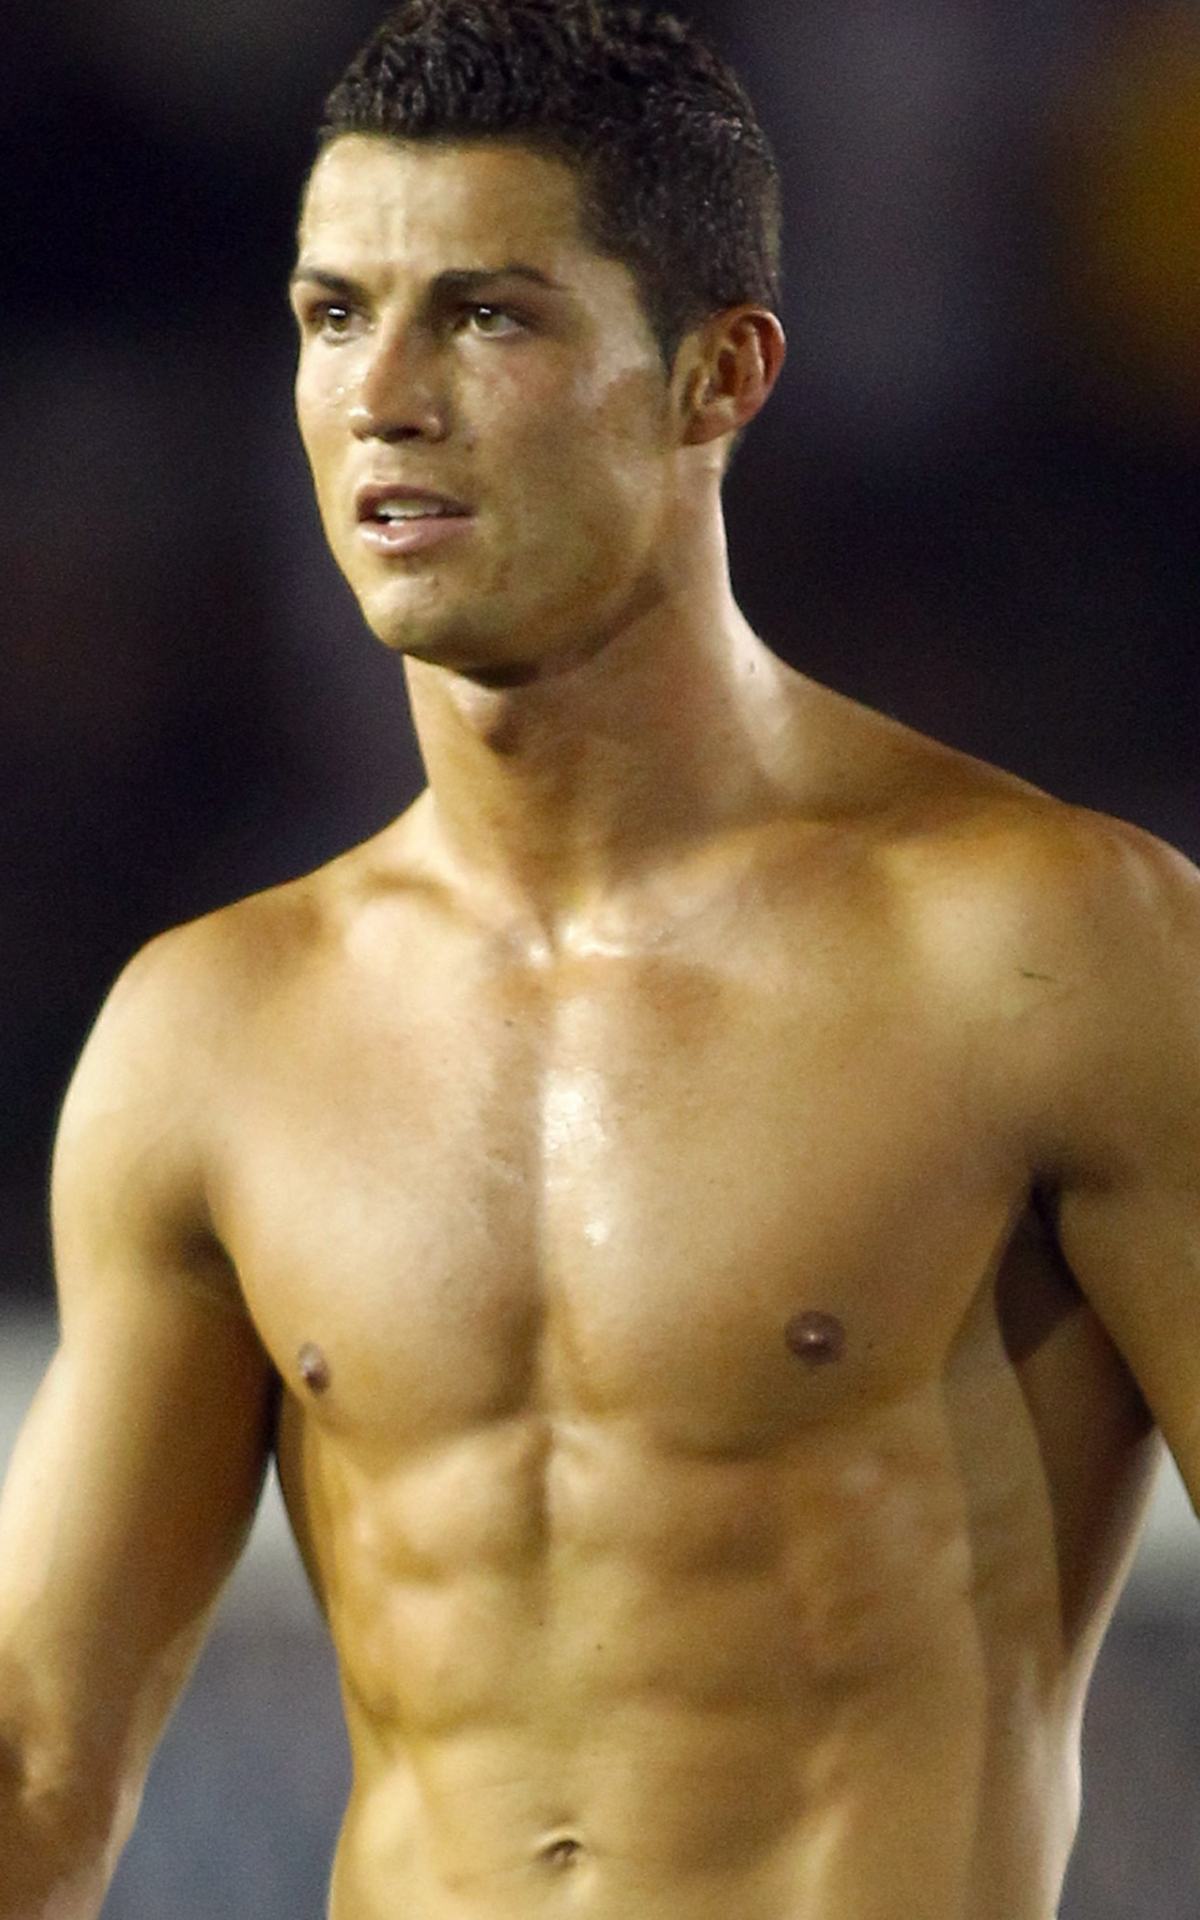 Free download Cristiano Ronaldo shirtless body wallpaper Cristiano Ronaldo [2514x2043] for your Desktop, Mobile & Tablet. Explore ABS Wallpaper. ABS Wallpaper, Jungkook Abs Wallpaper, BTS Abs Wallpaper